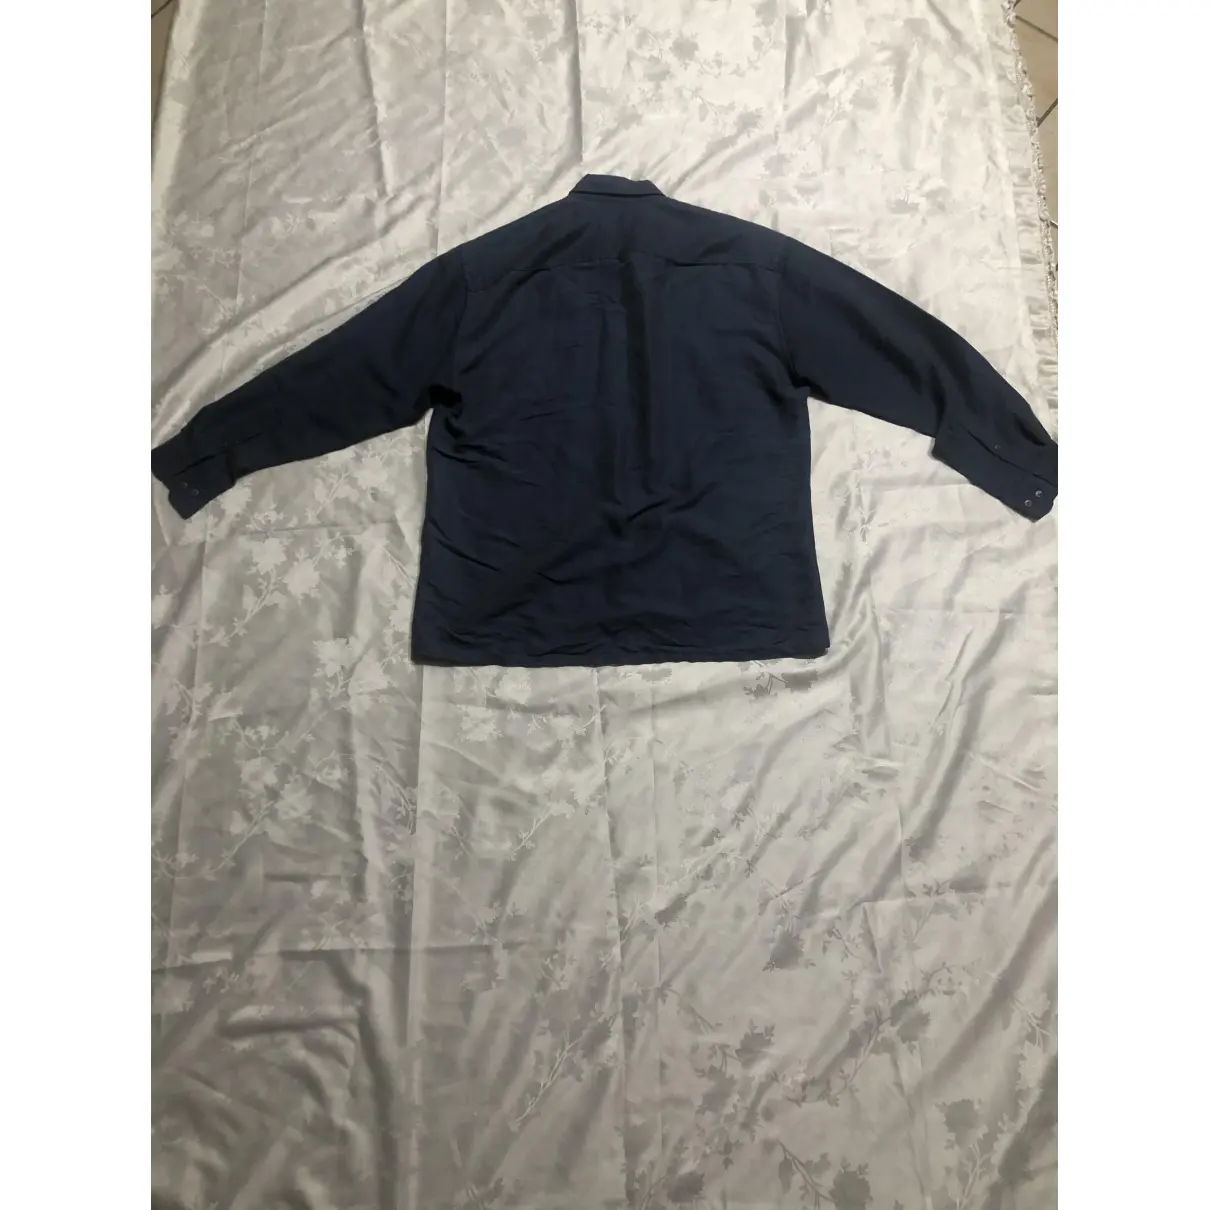 Buy Pierre Cardin Linen shirt online - Vintage